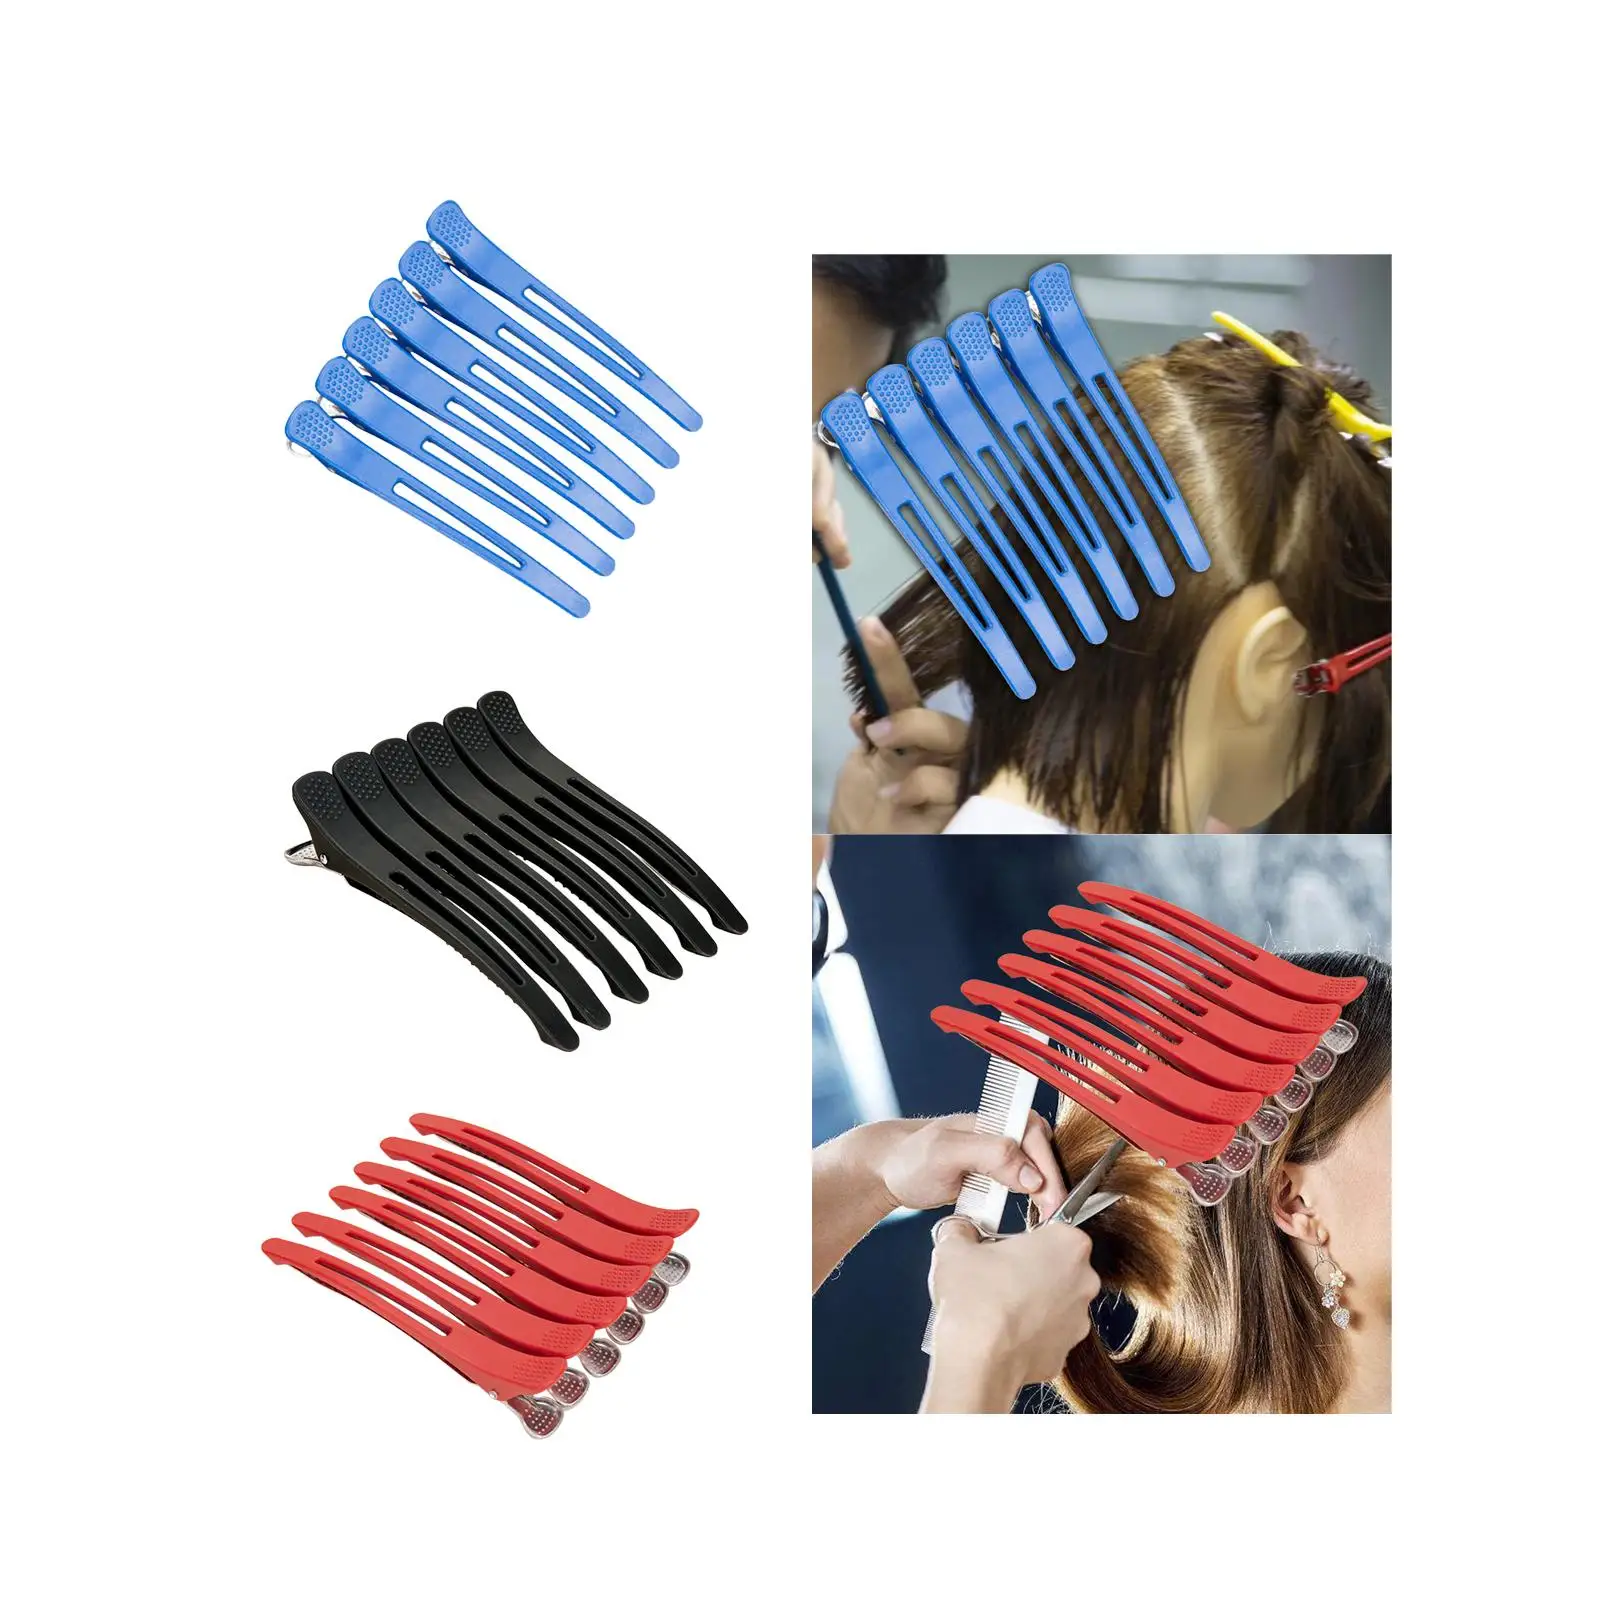 6x Duck Billed Hair Clips Professional Hair Cutting Clips Hair Pins Salon Hair Sectioning Clips for Hairdresser Hair Drying